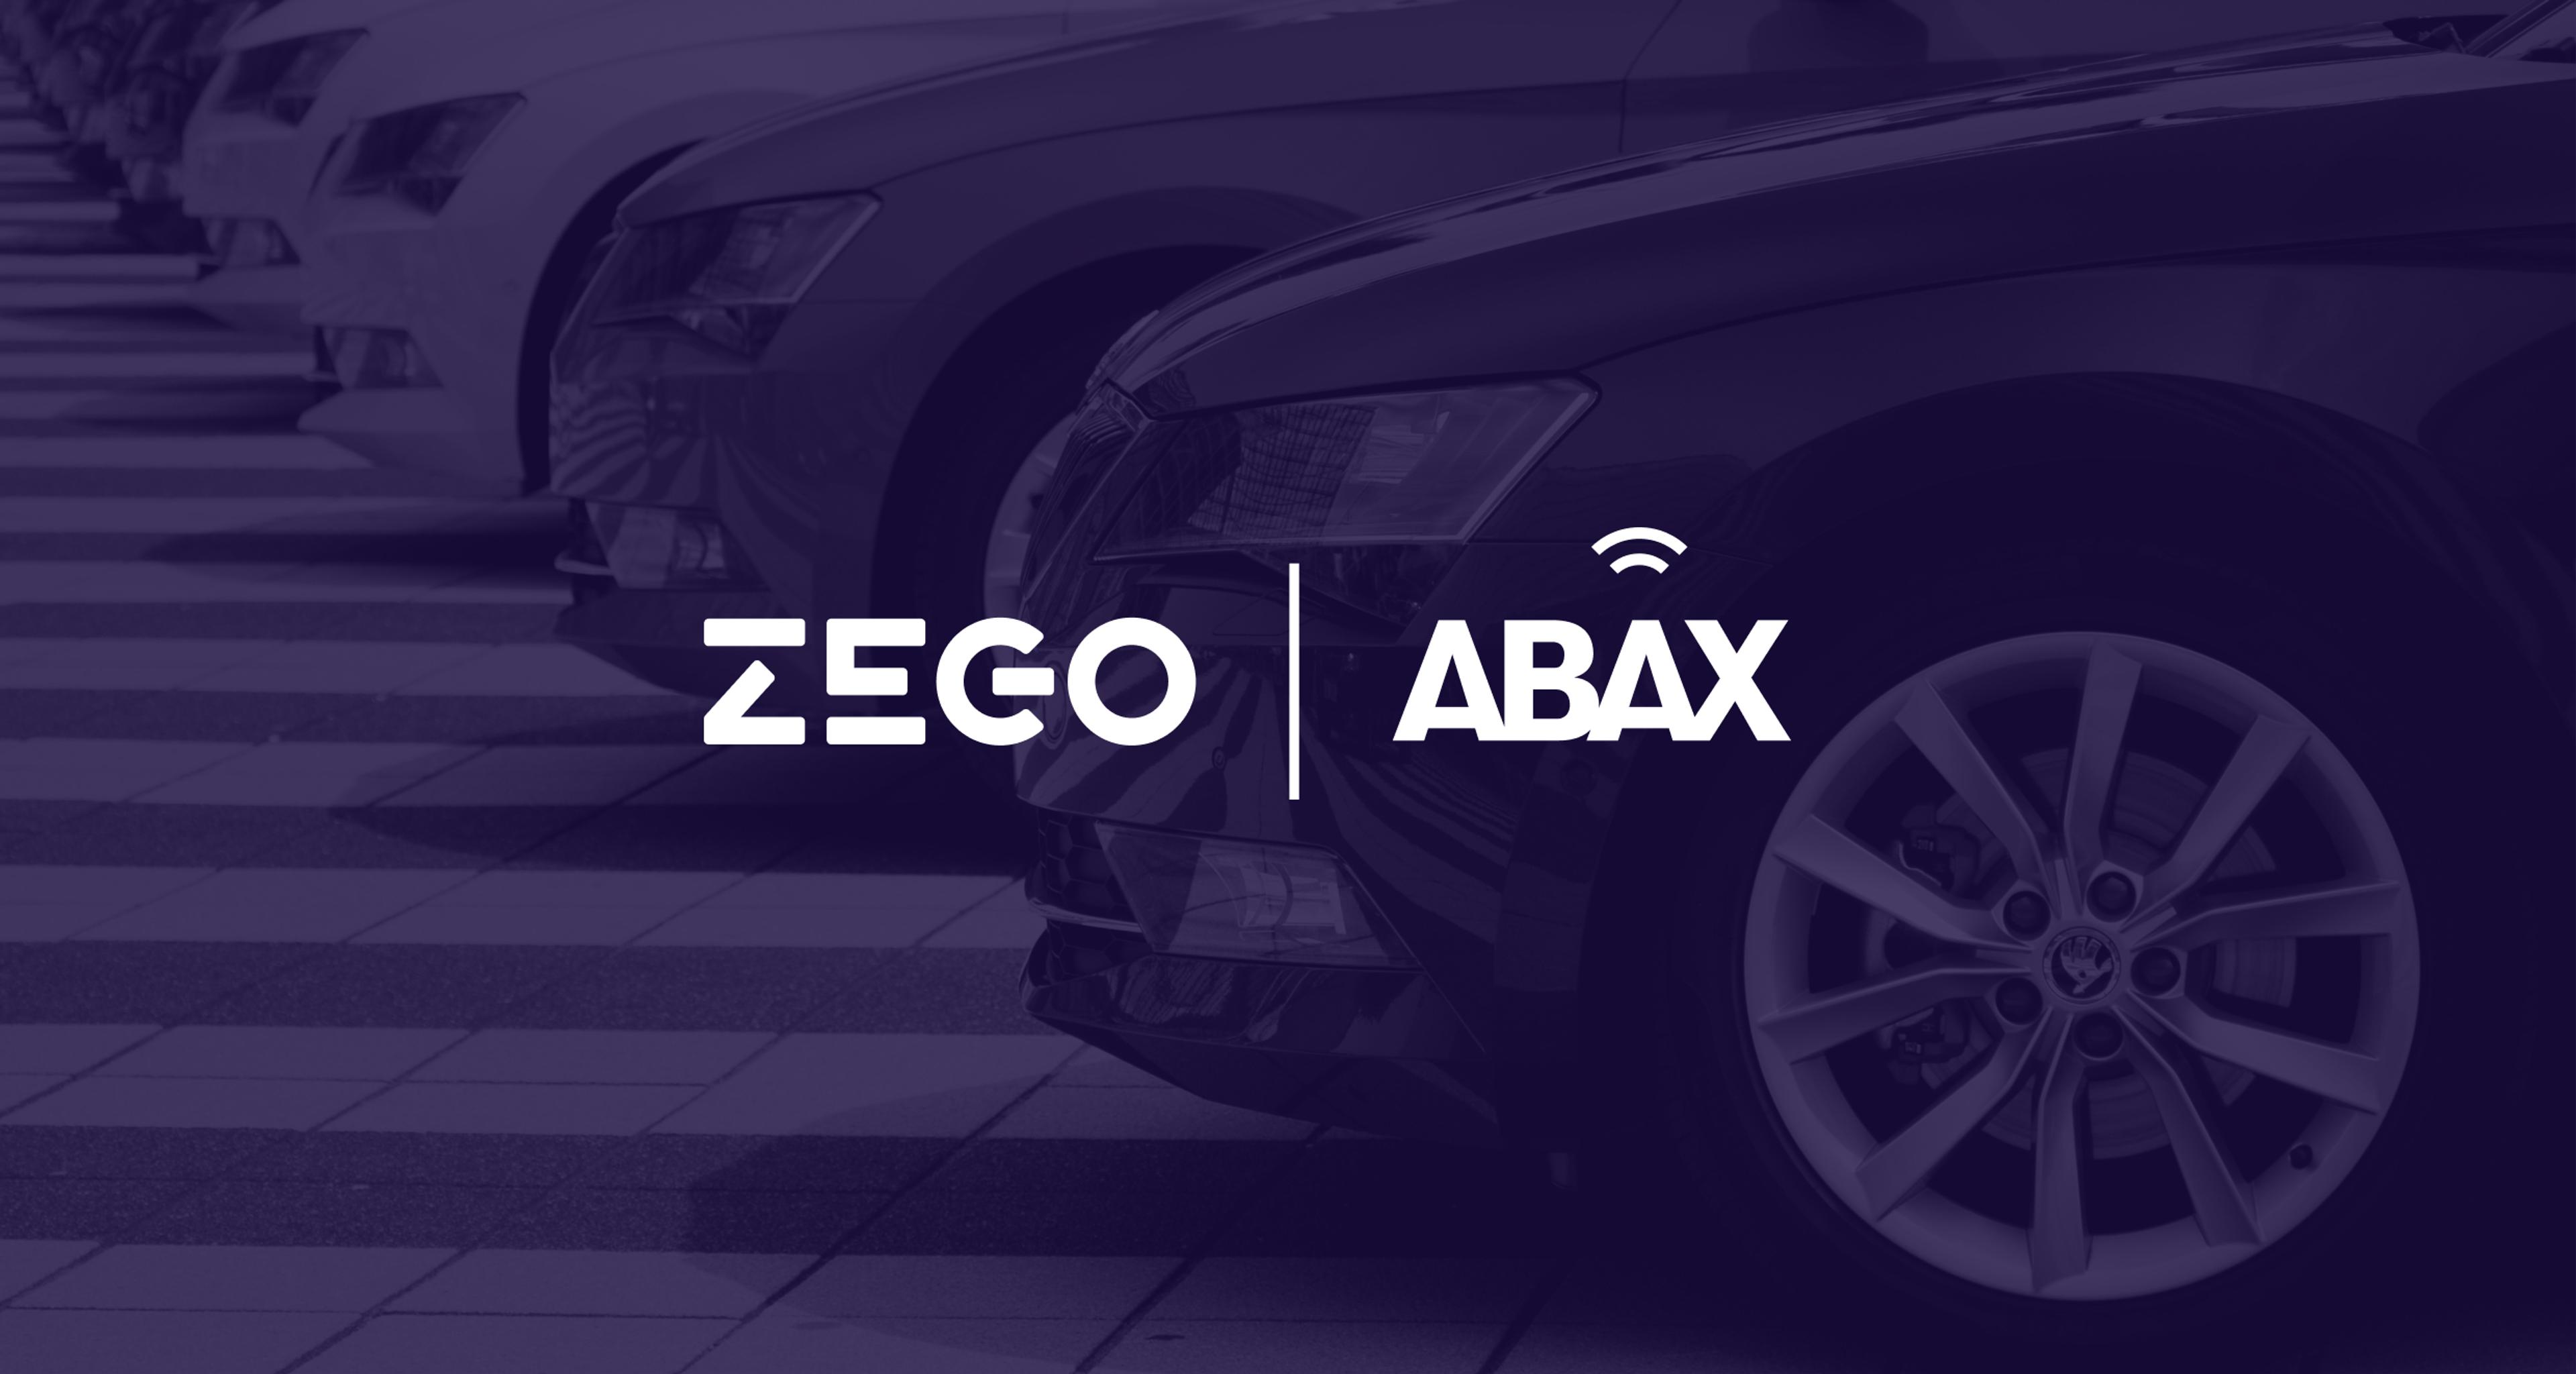 Usage-based Fleet insurance powered by ABAX